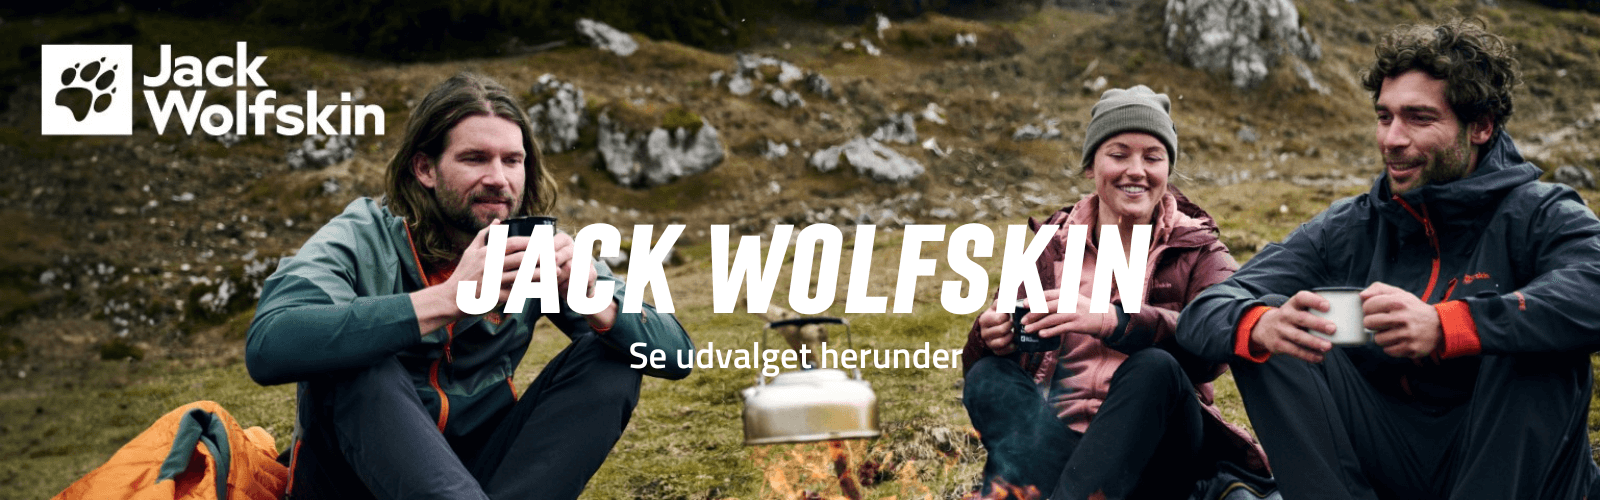 Jack Wolfskin - Dansk webshop med prisgaranti